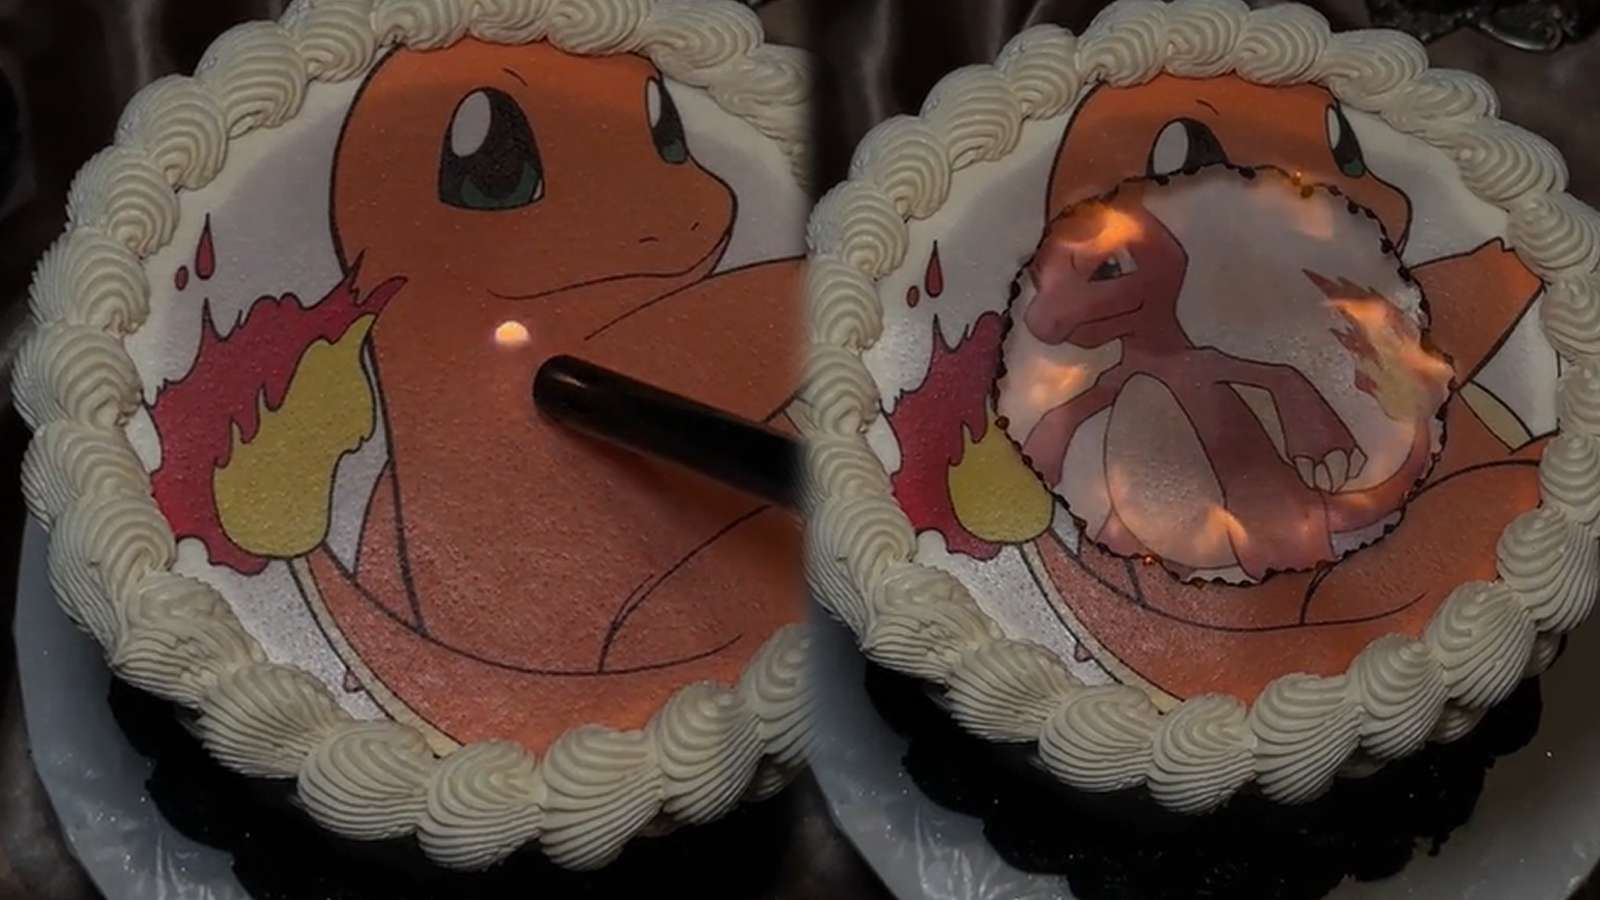 Jaw-dropping birthday cake burns away layers to show Charizard evolution